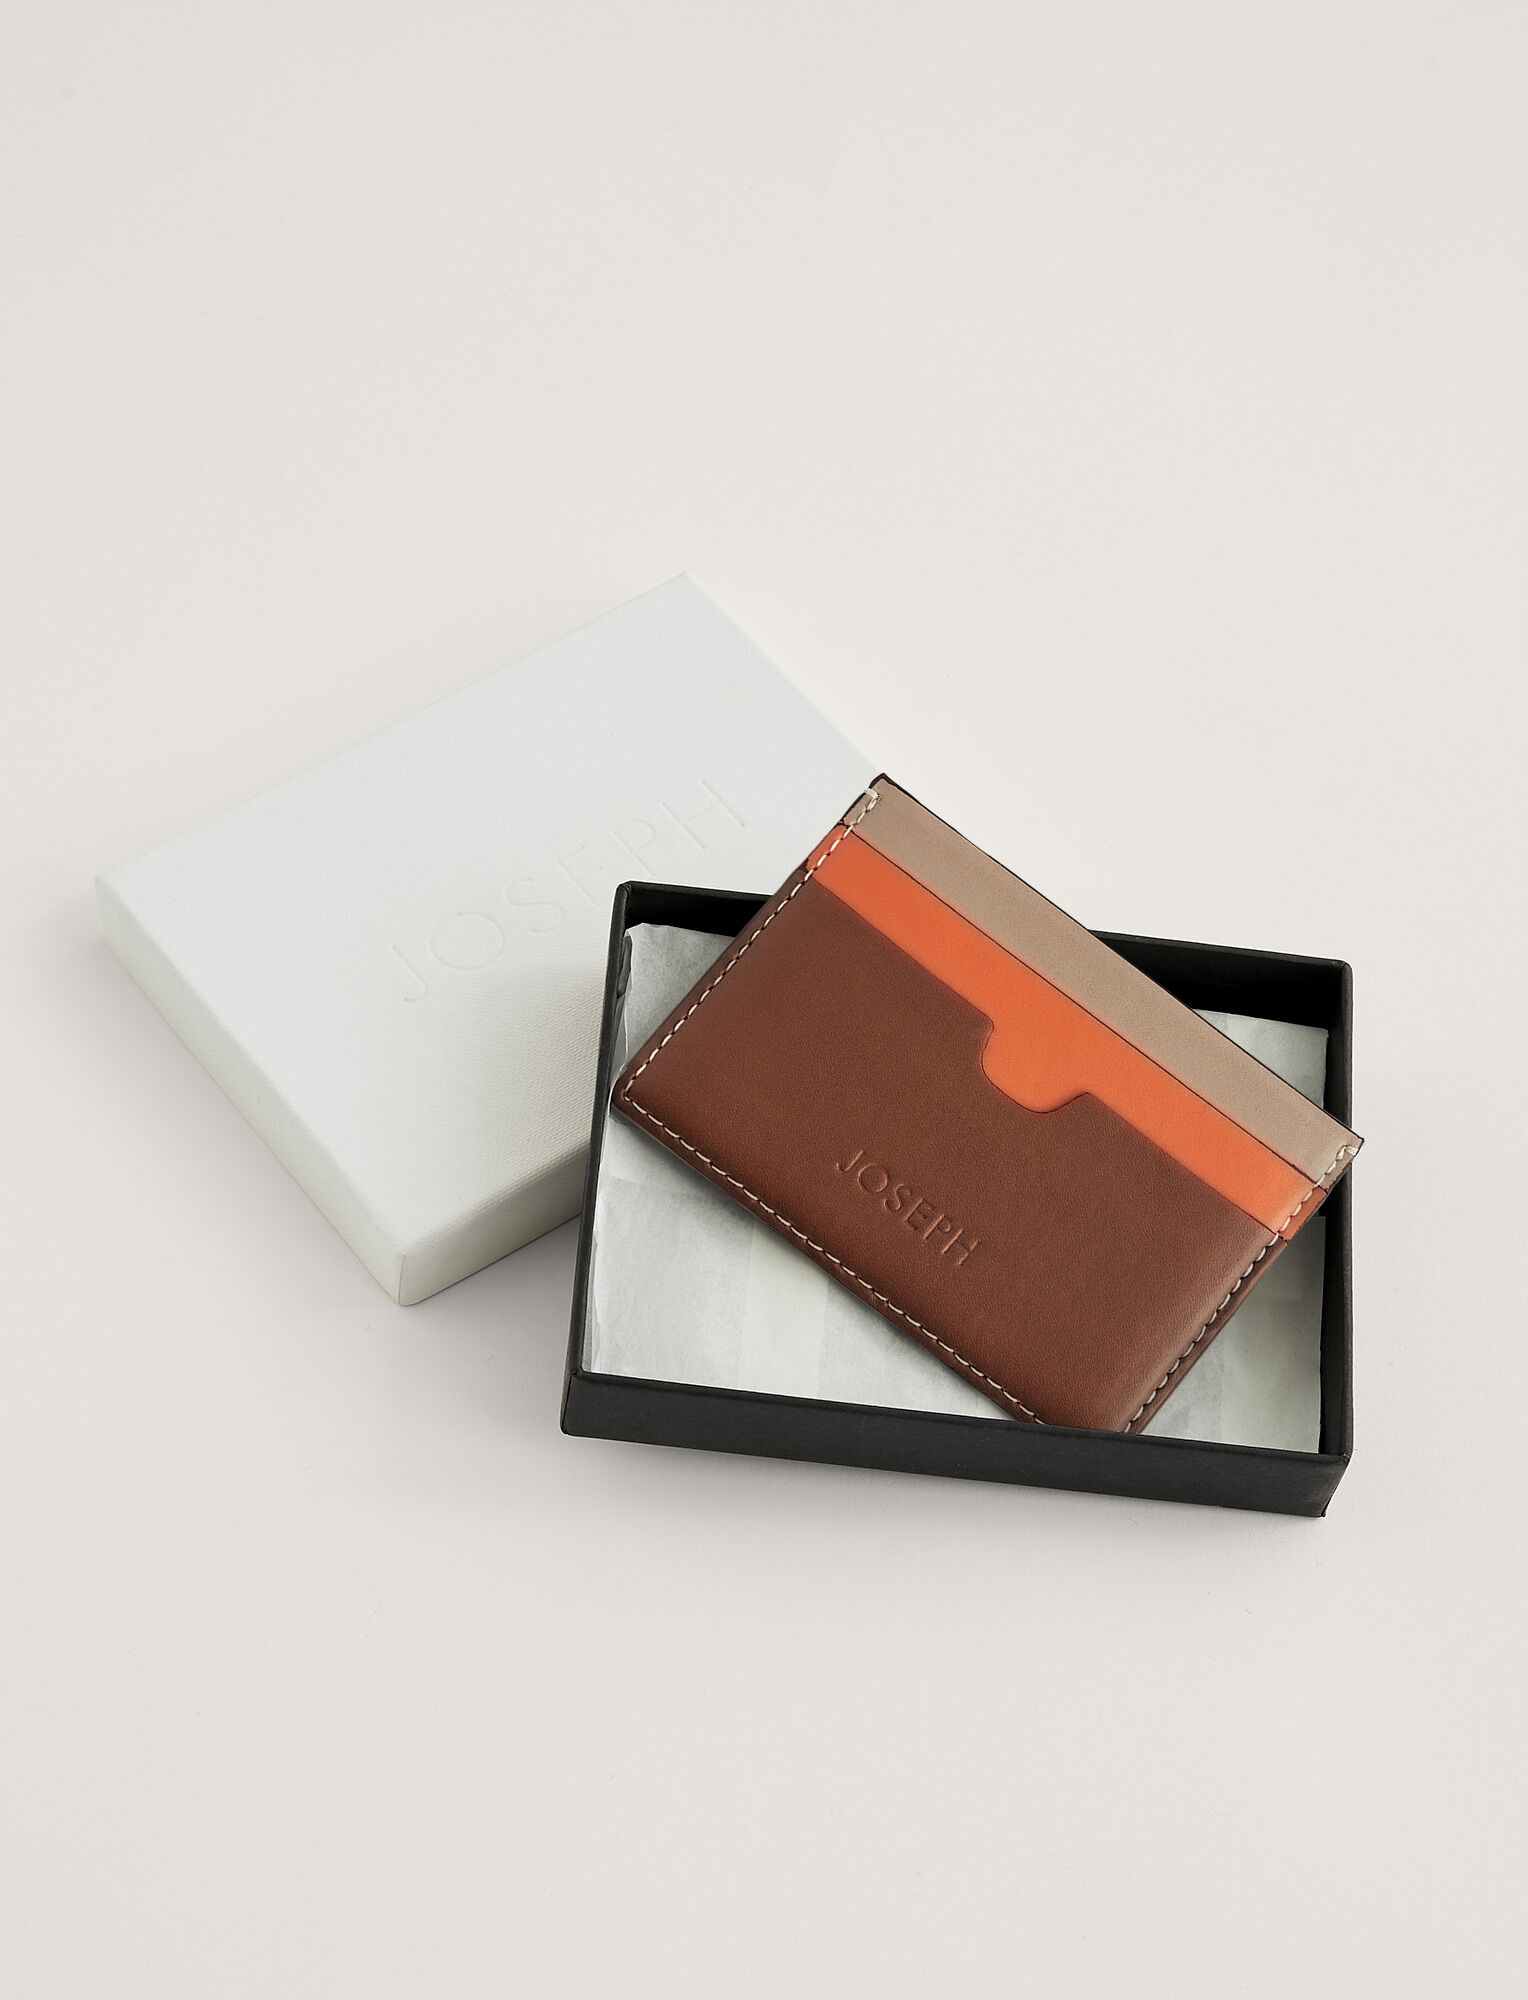 Joseph, Leather Card Holder, in MIX 3 MINK/ORANGE/TAN